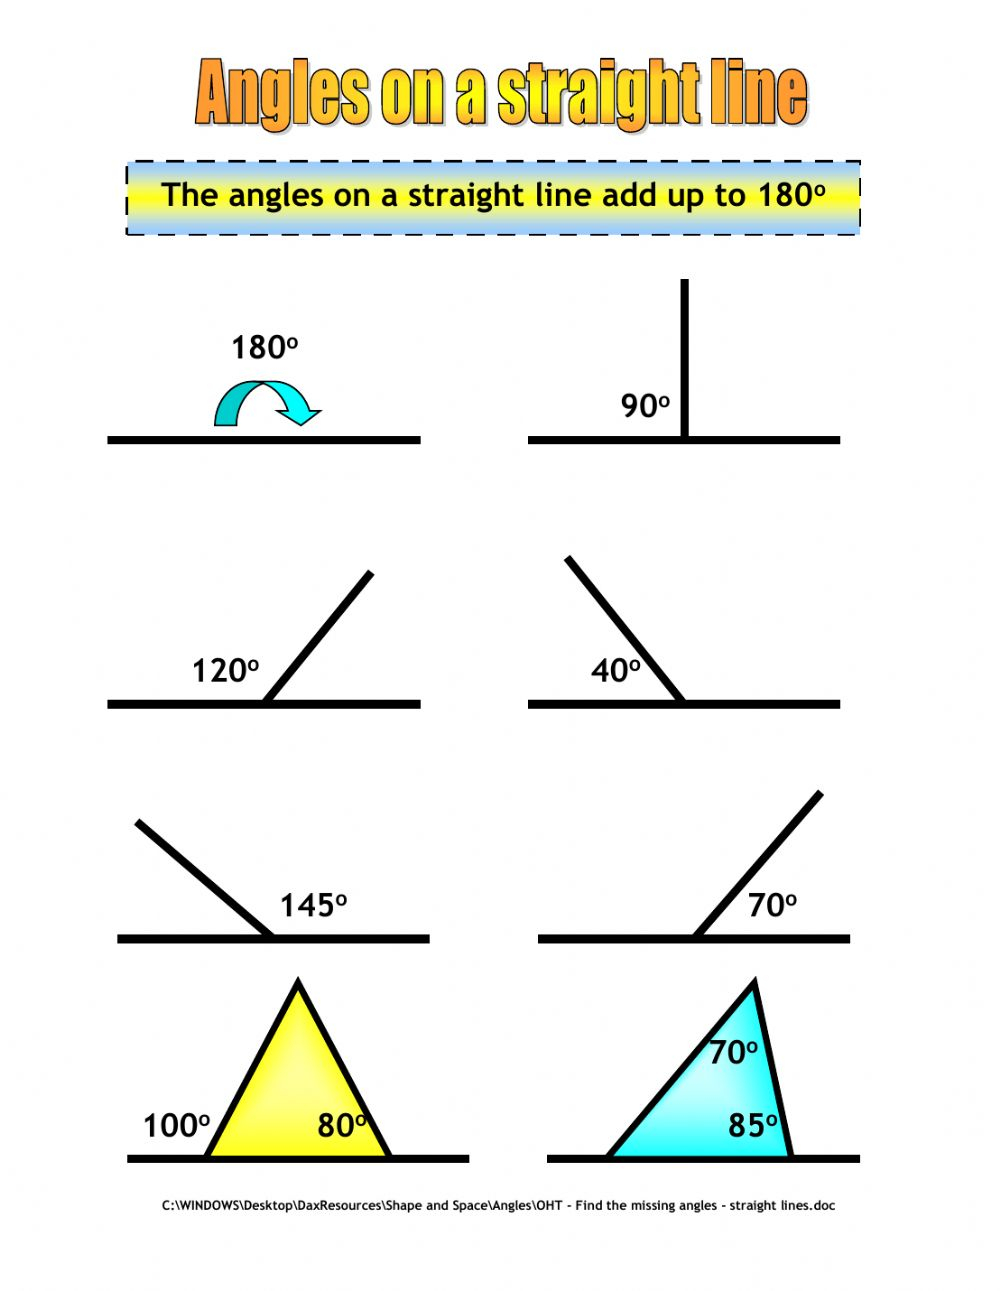 Lines And Angles Worksheet Word Worksheet